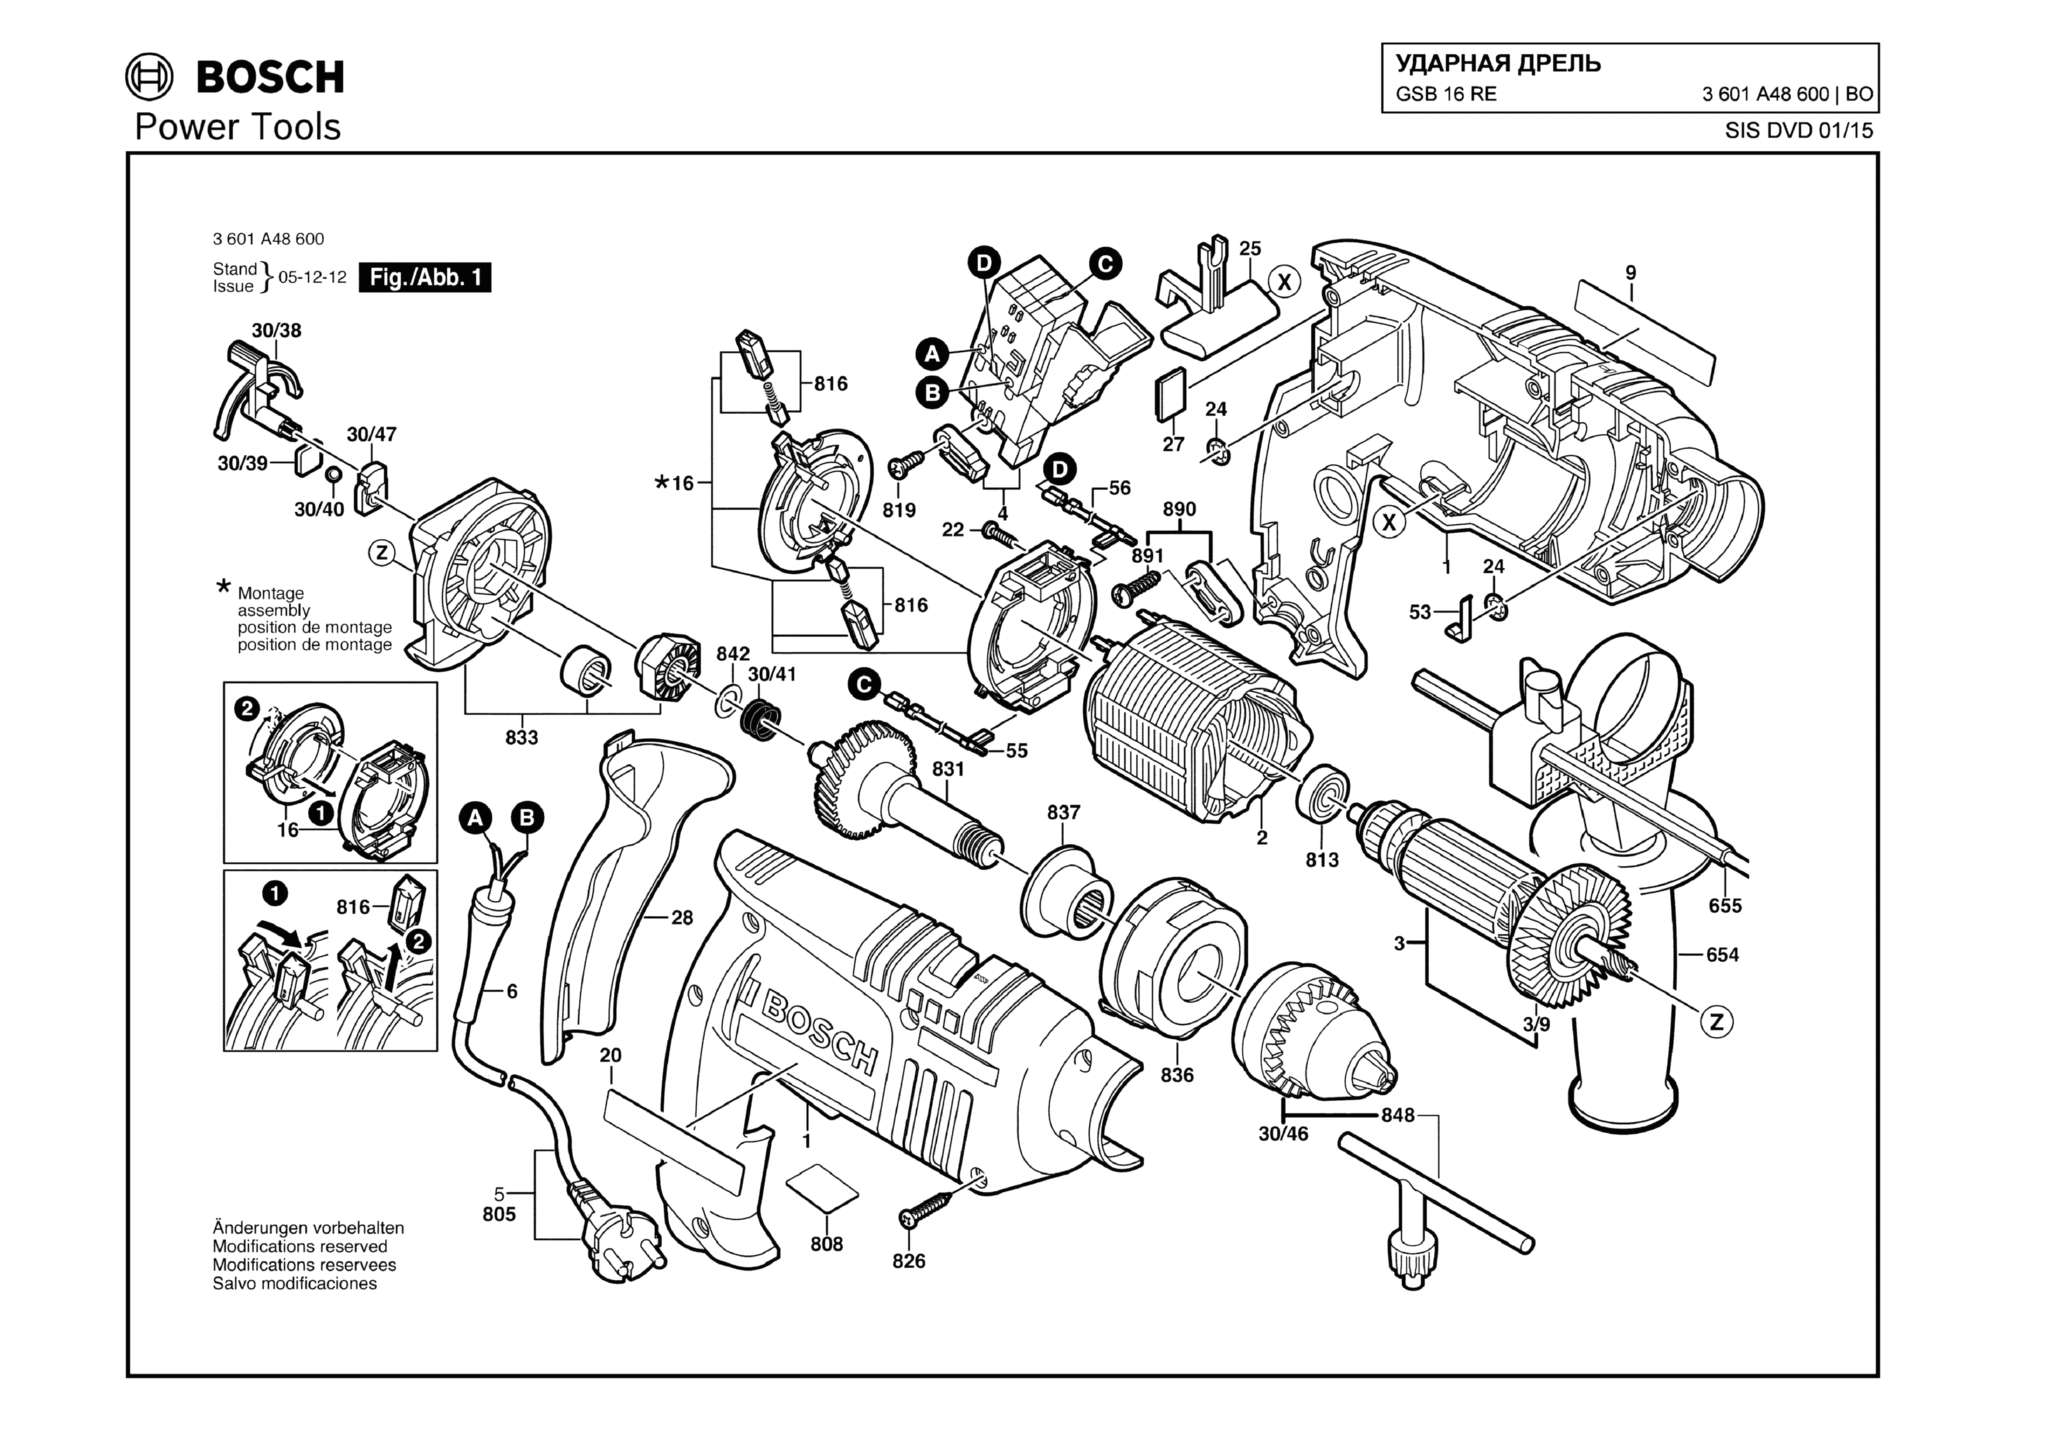 Запчасти, схема и деталировка Bosch GSB 16 RE (ТИП 3601A48600)